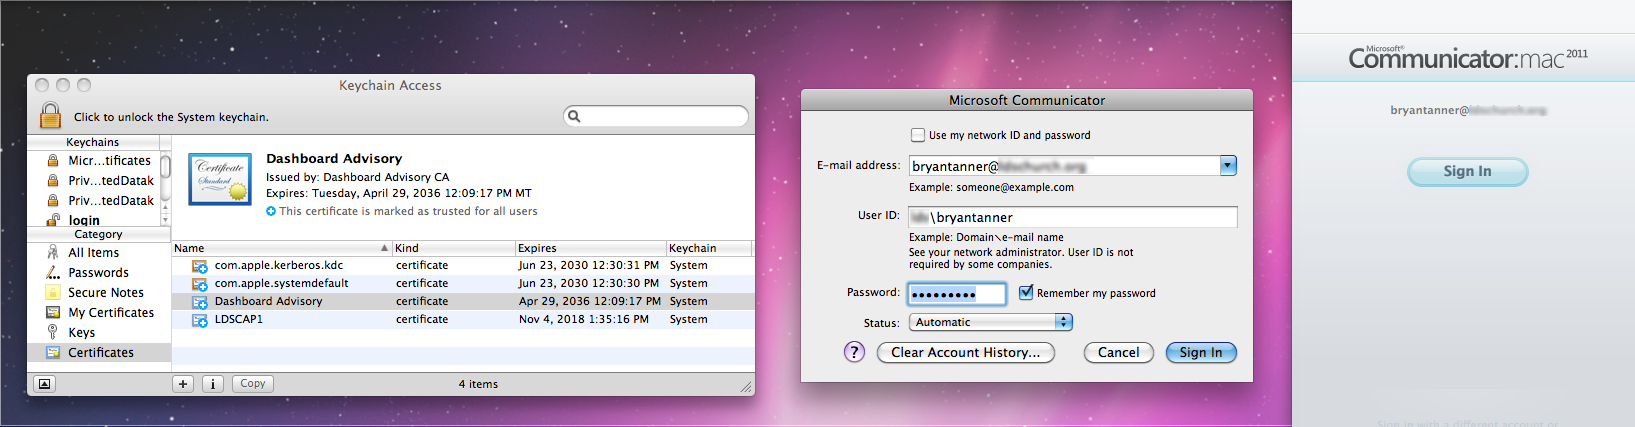 Microsoft communicator for mac free download